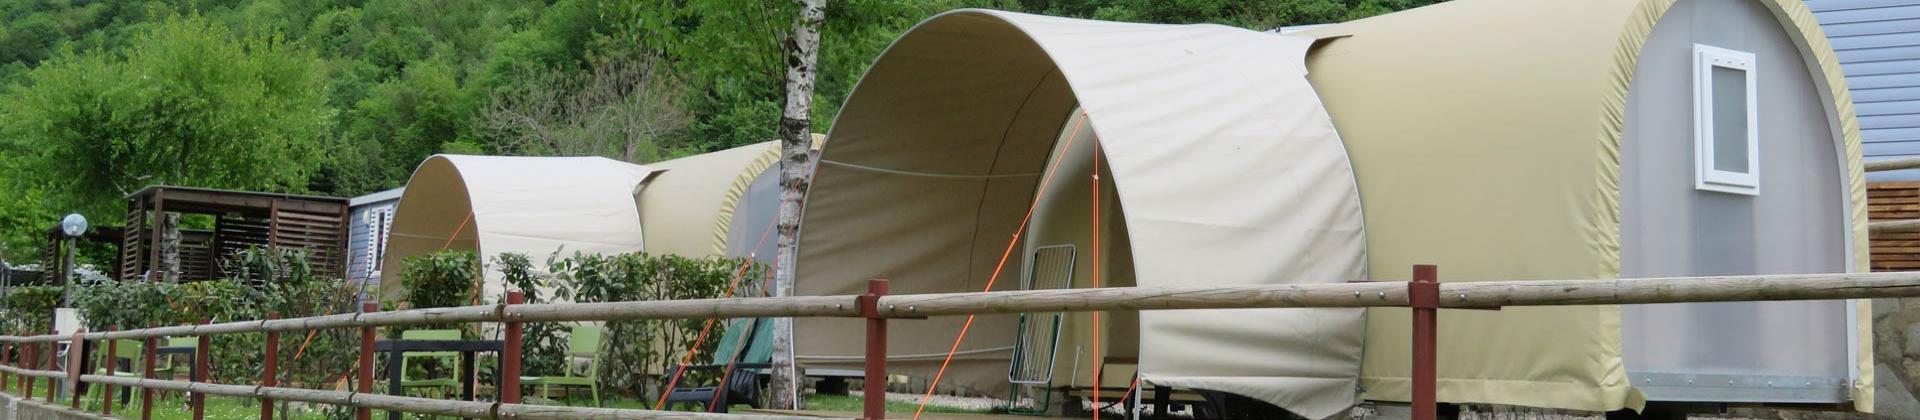 campingdarna it coco-sweet-tent 013